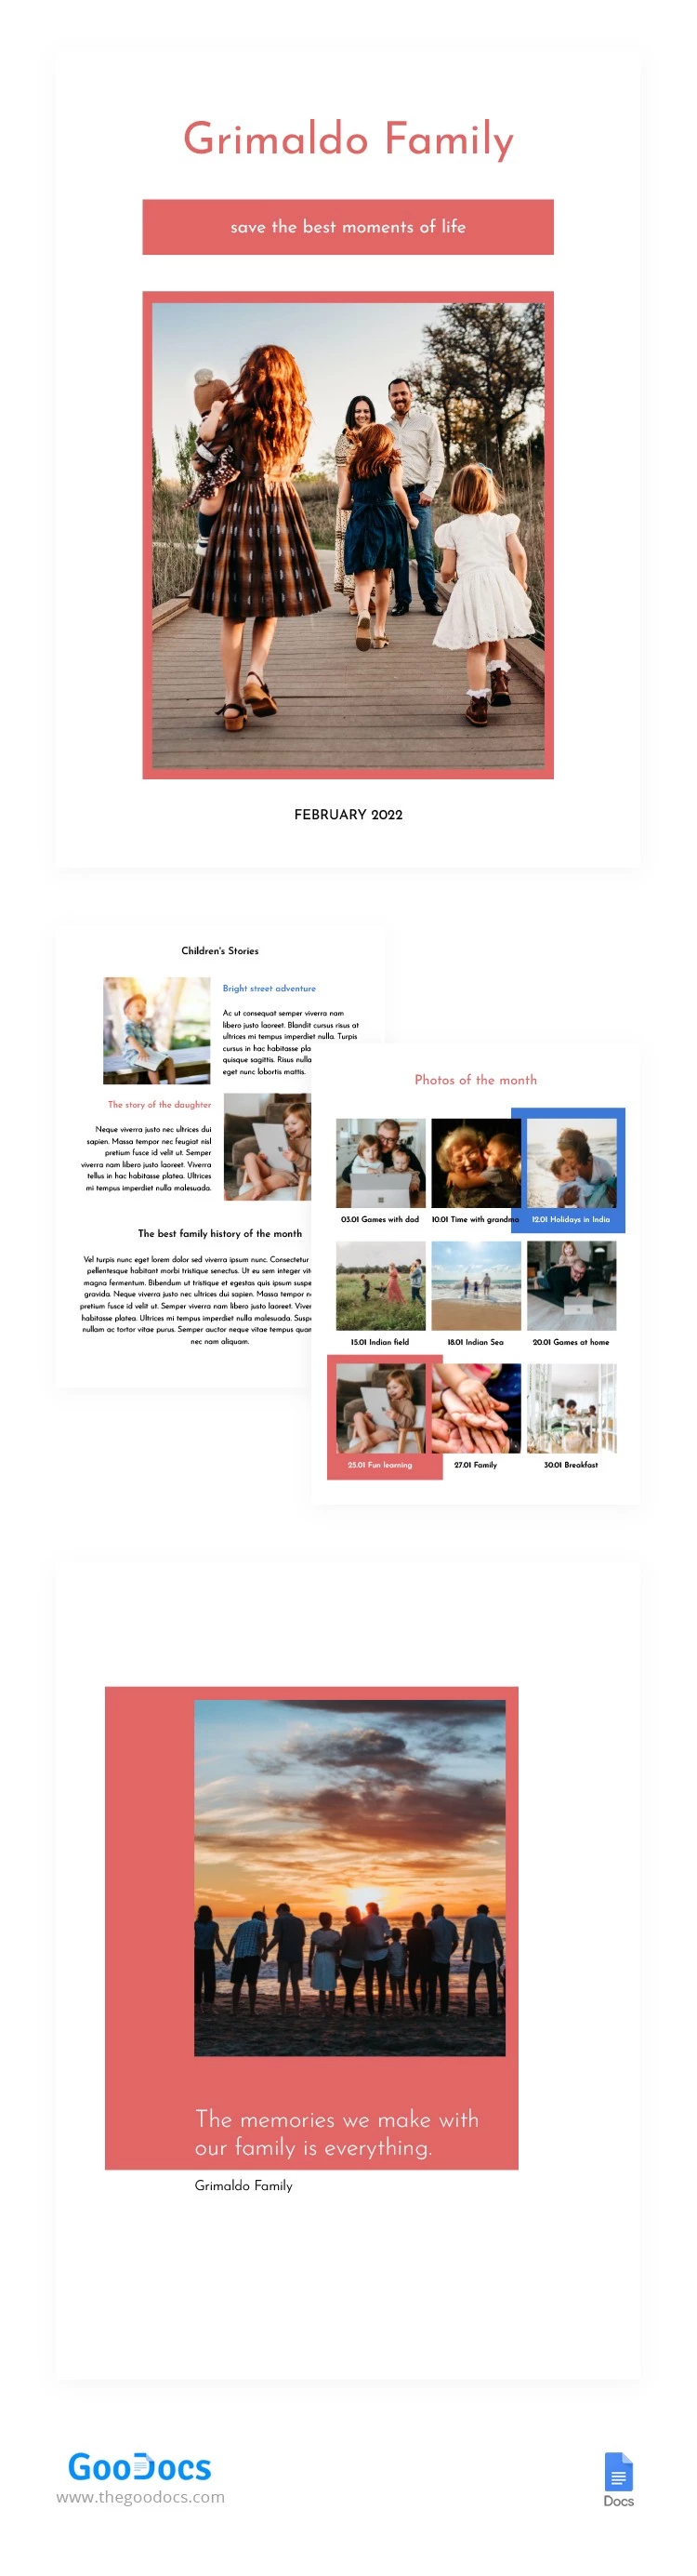 Family Photo Album - free Google Docs Template - 10063489